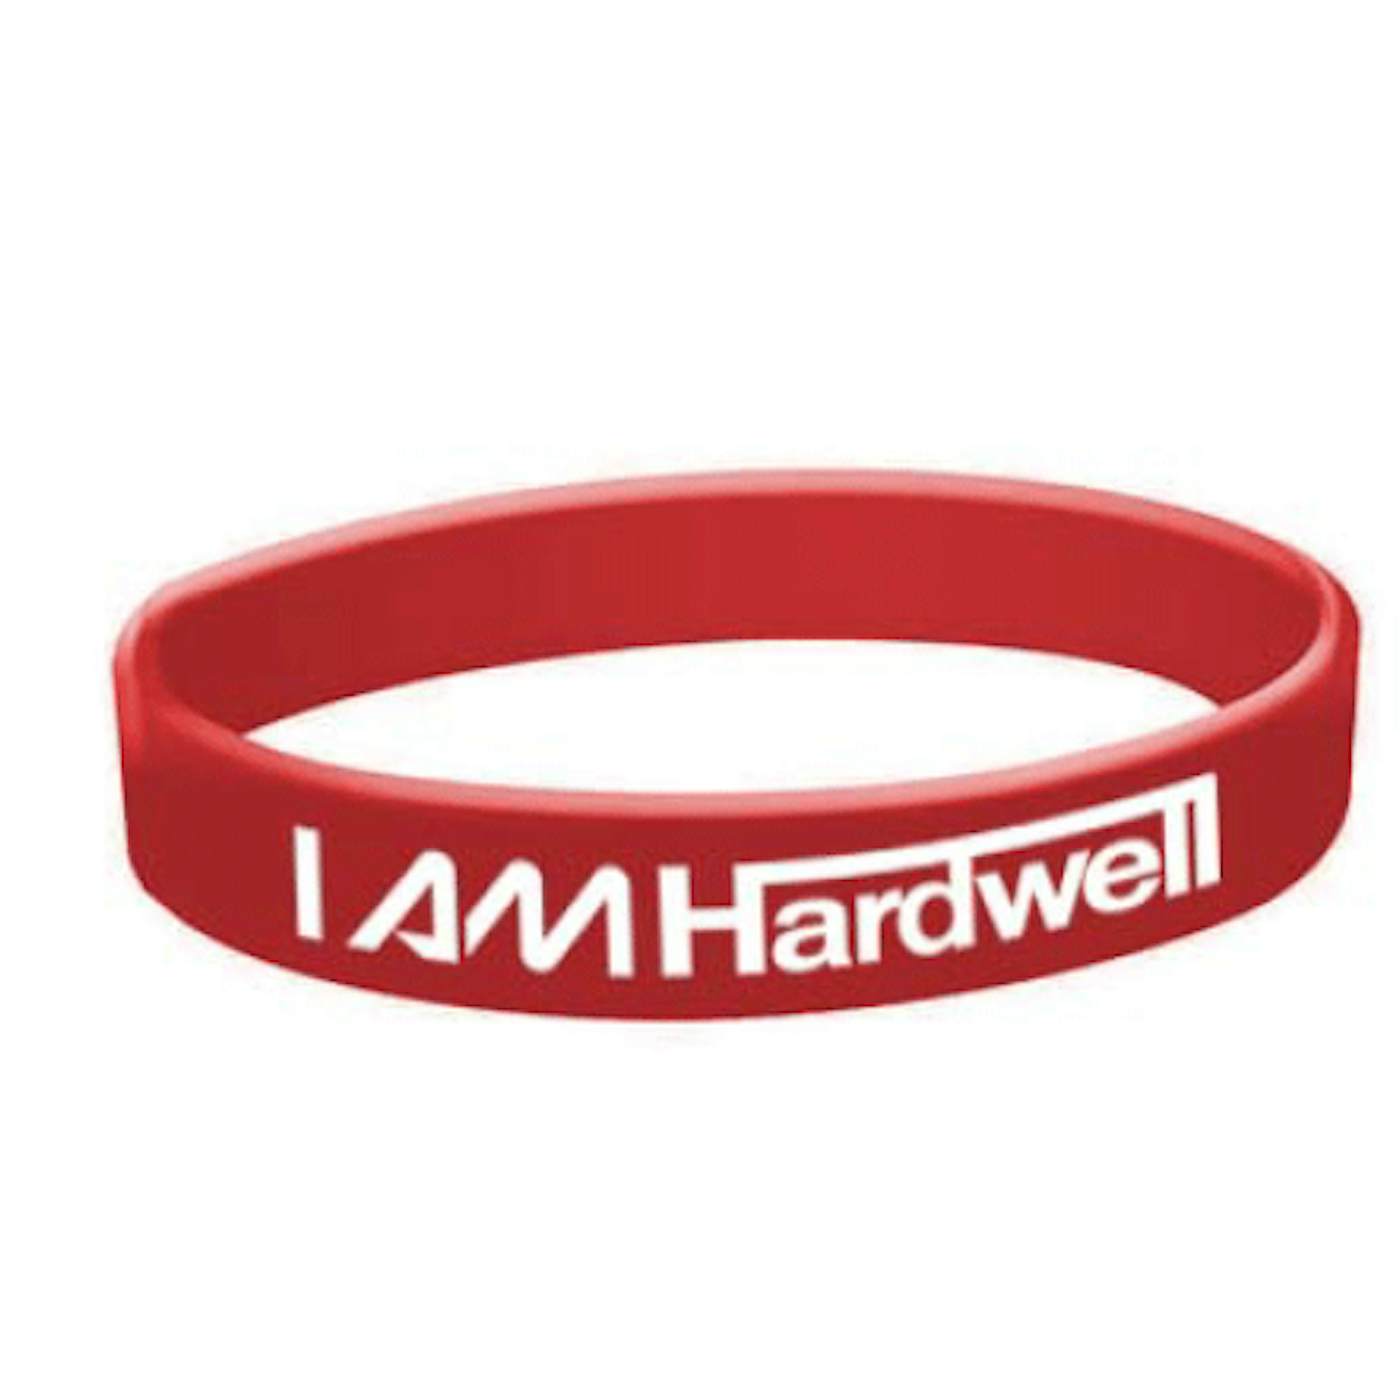 Hardwell Wristband